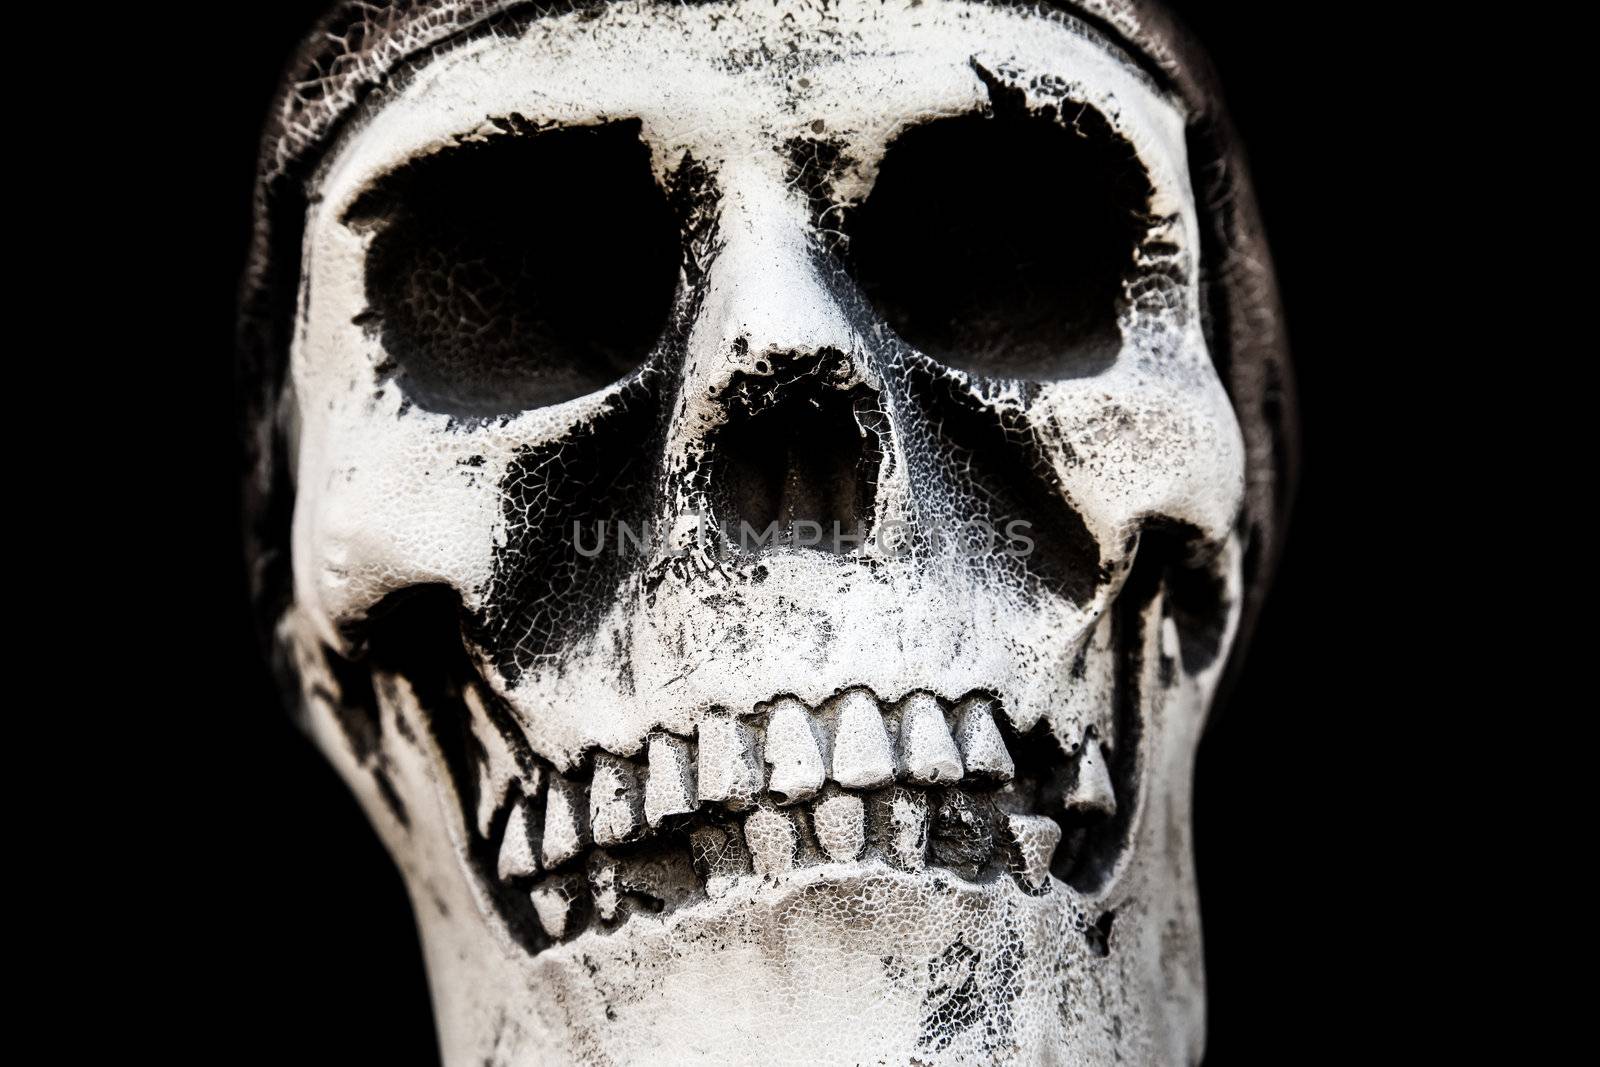 Human anatomy - ancient people skull bone